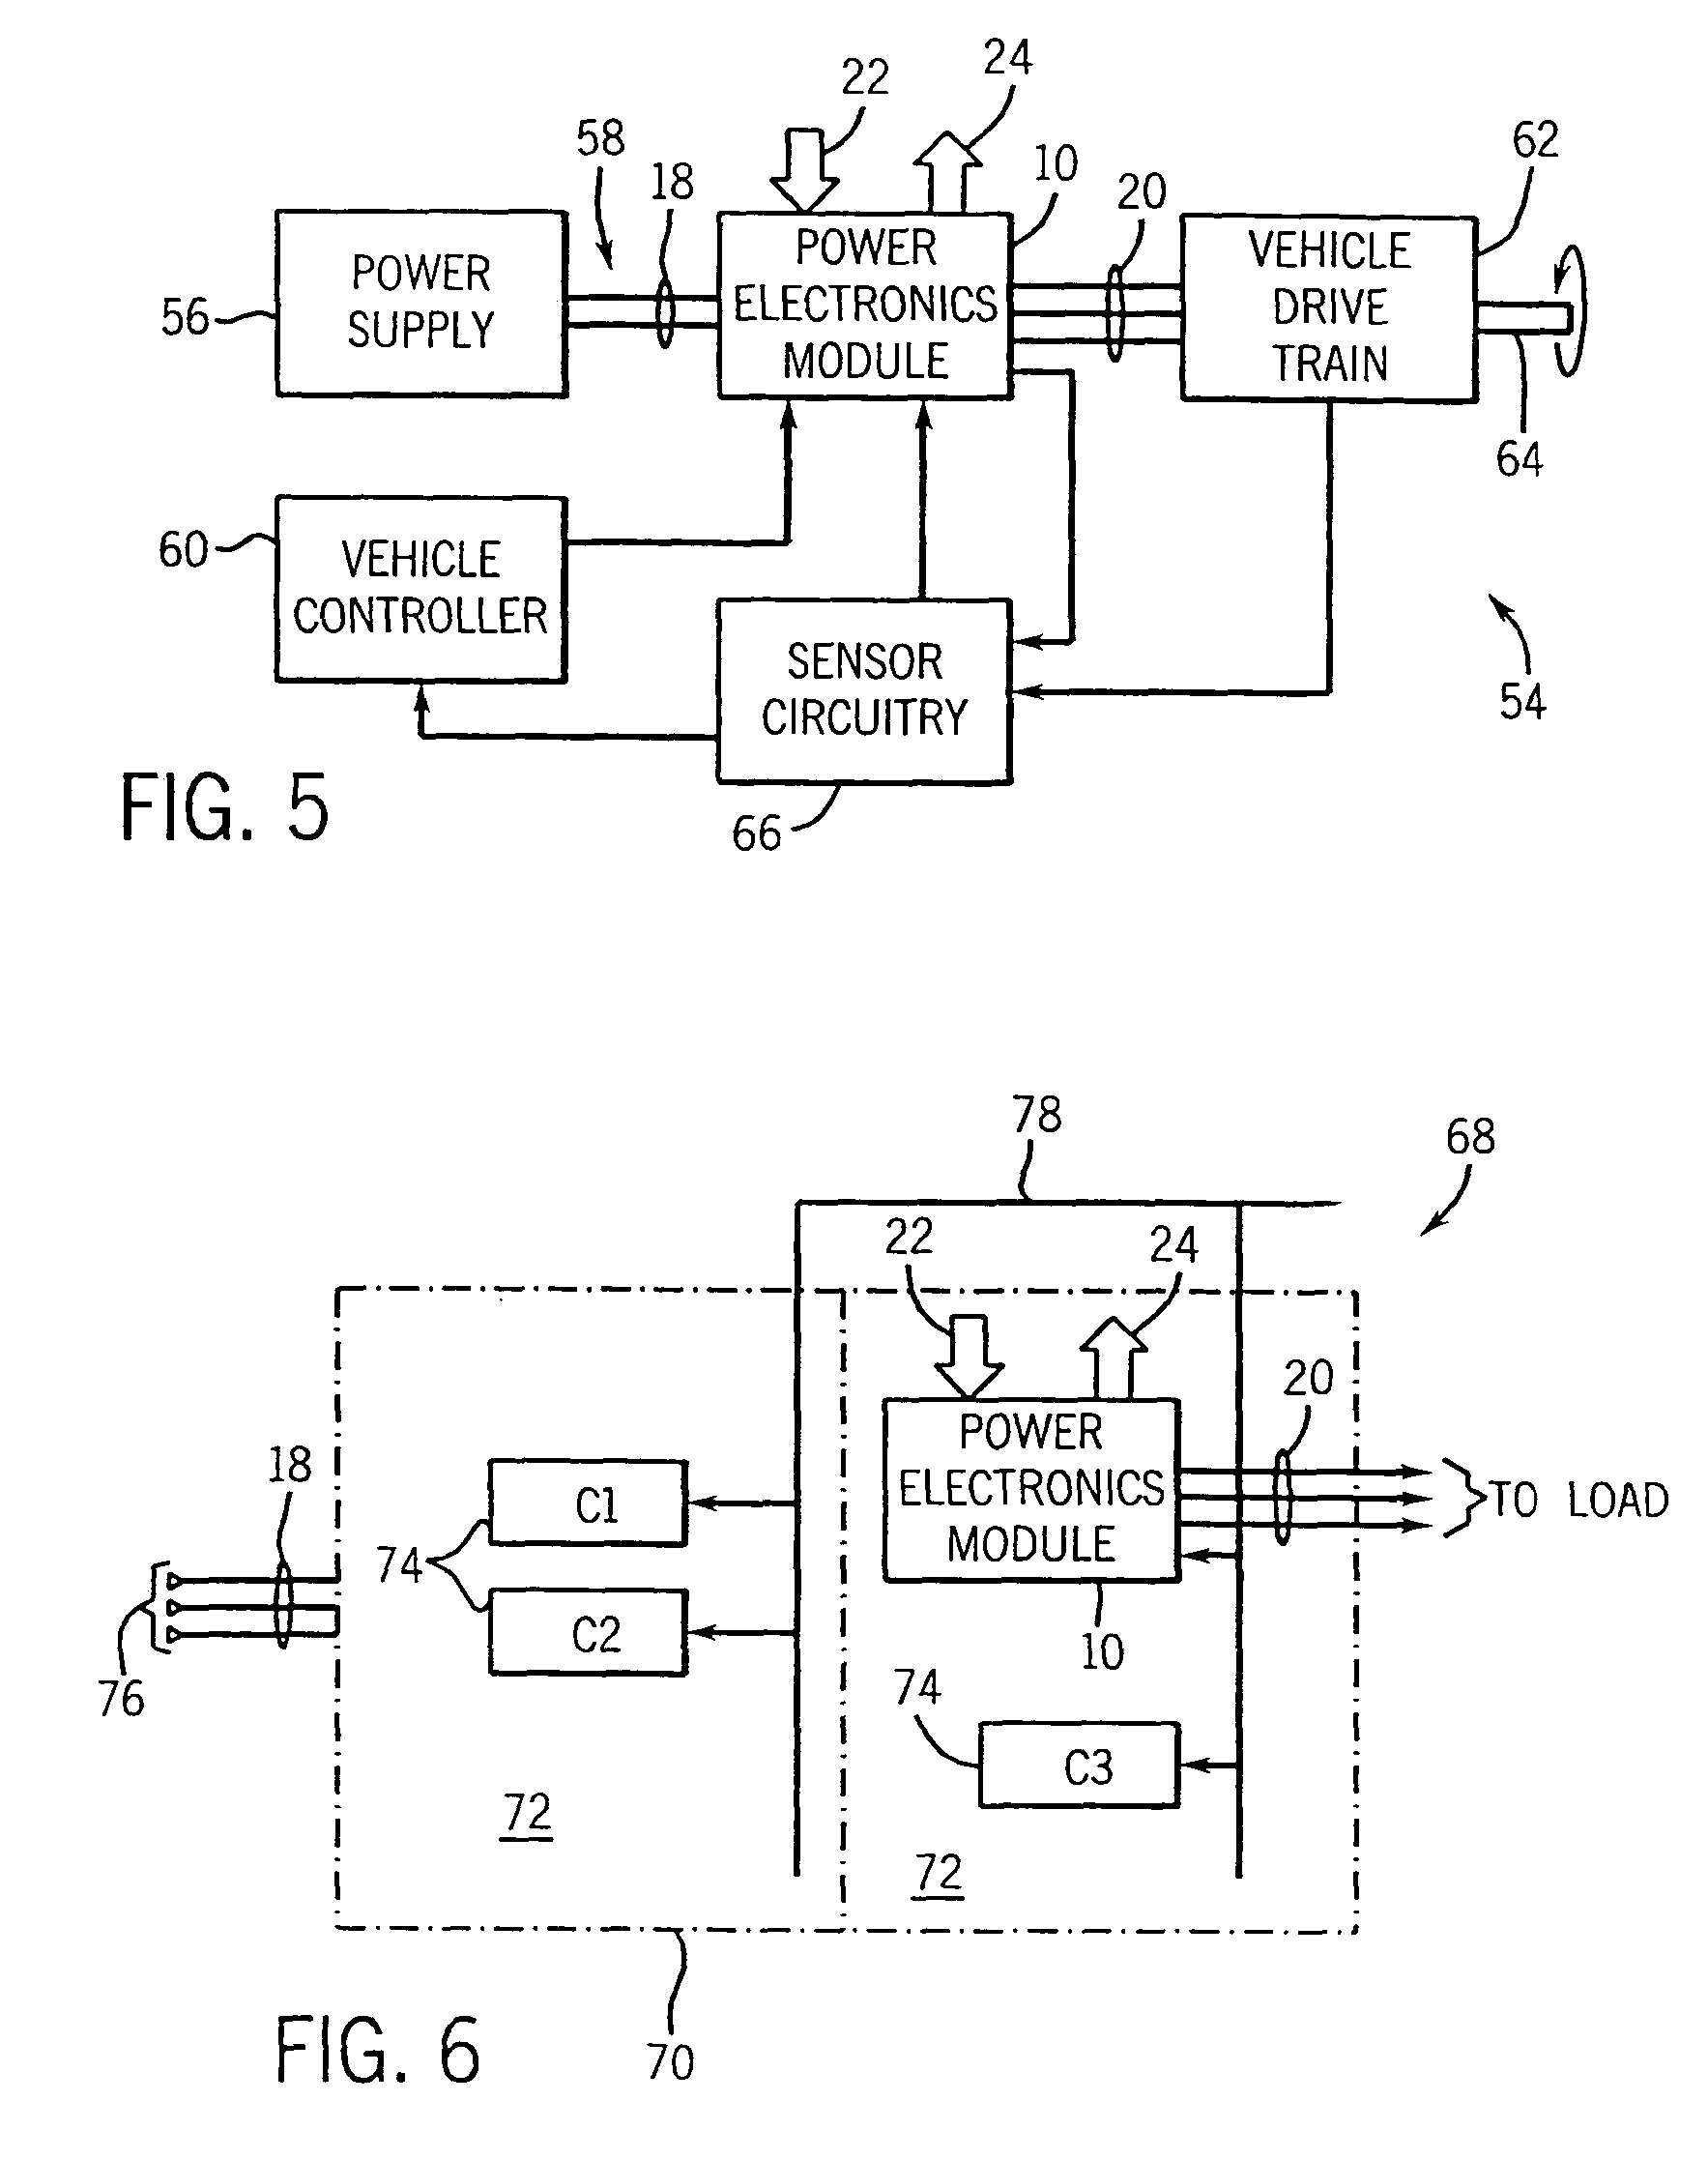 Power converter connection configuration